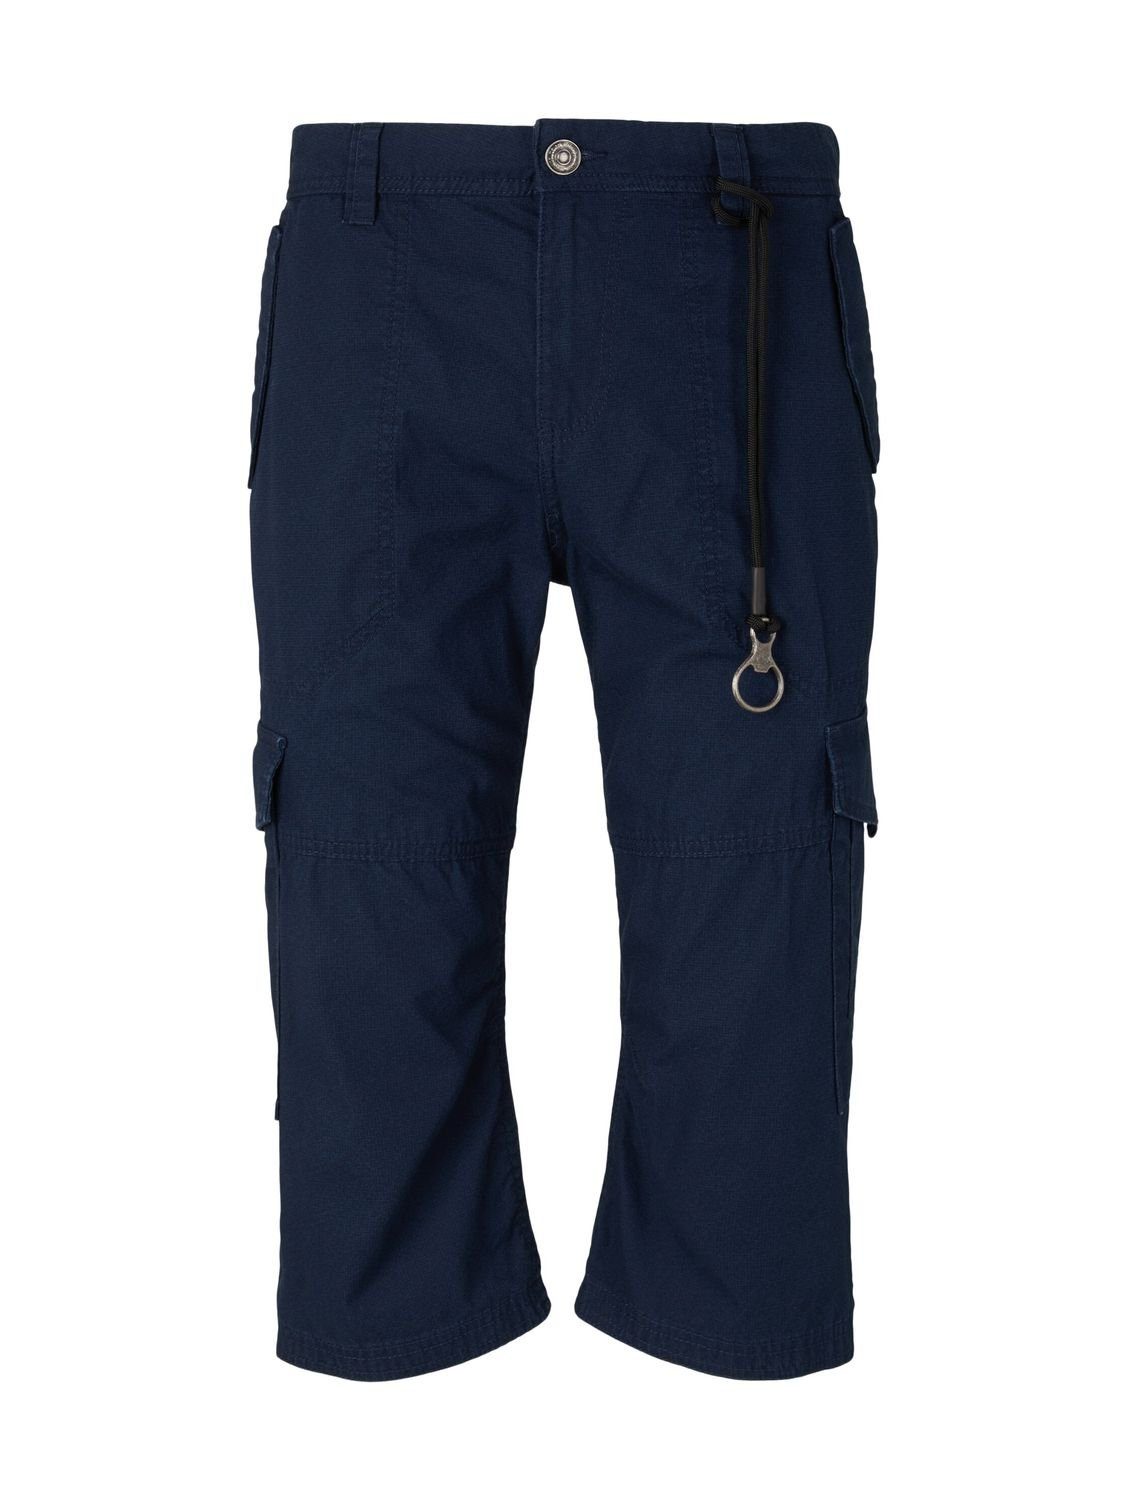 TOM TAILOR Shorts MAX OVERKNEE aus Baumwolle Navy Minimal Design 29122